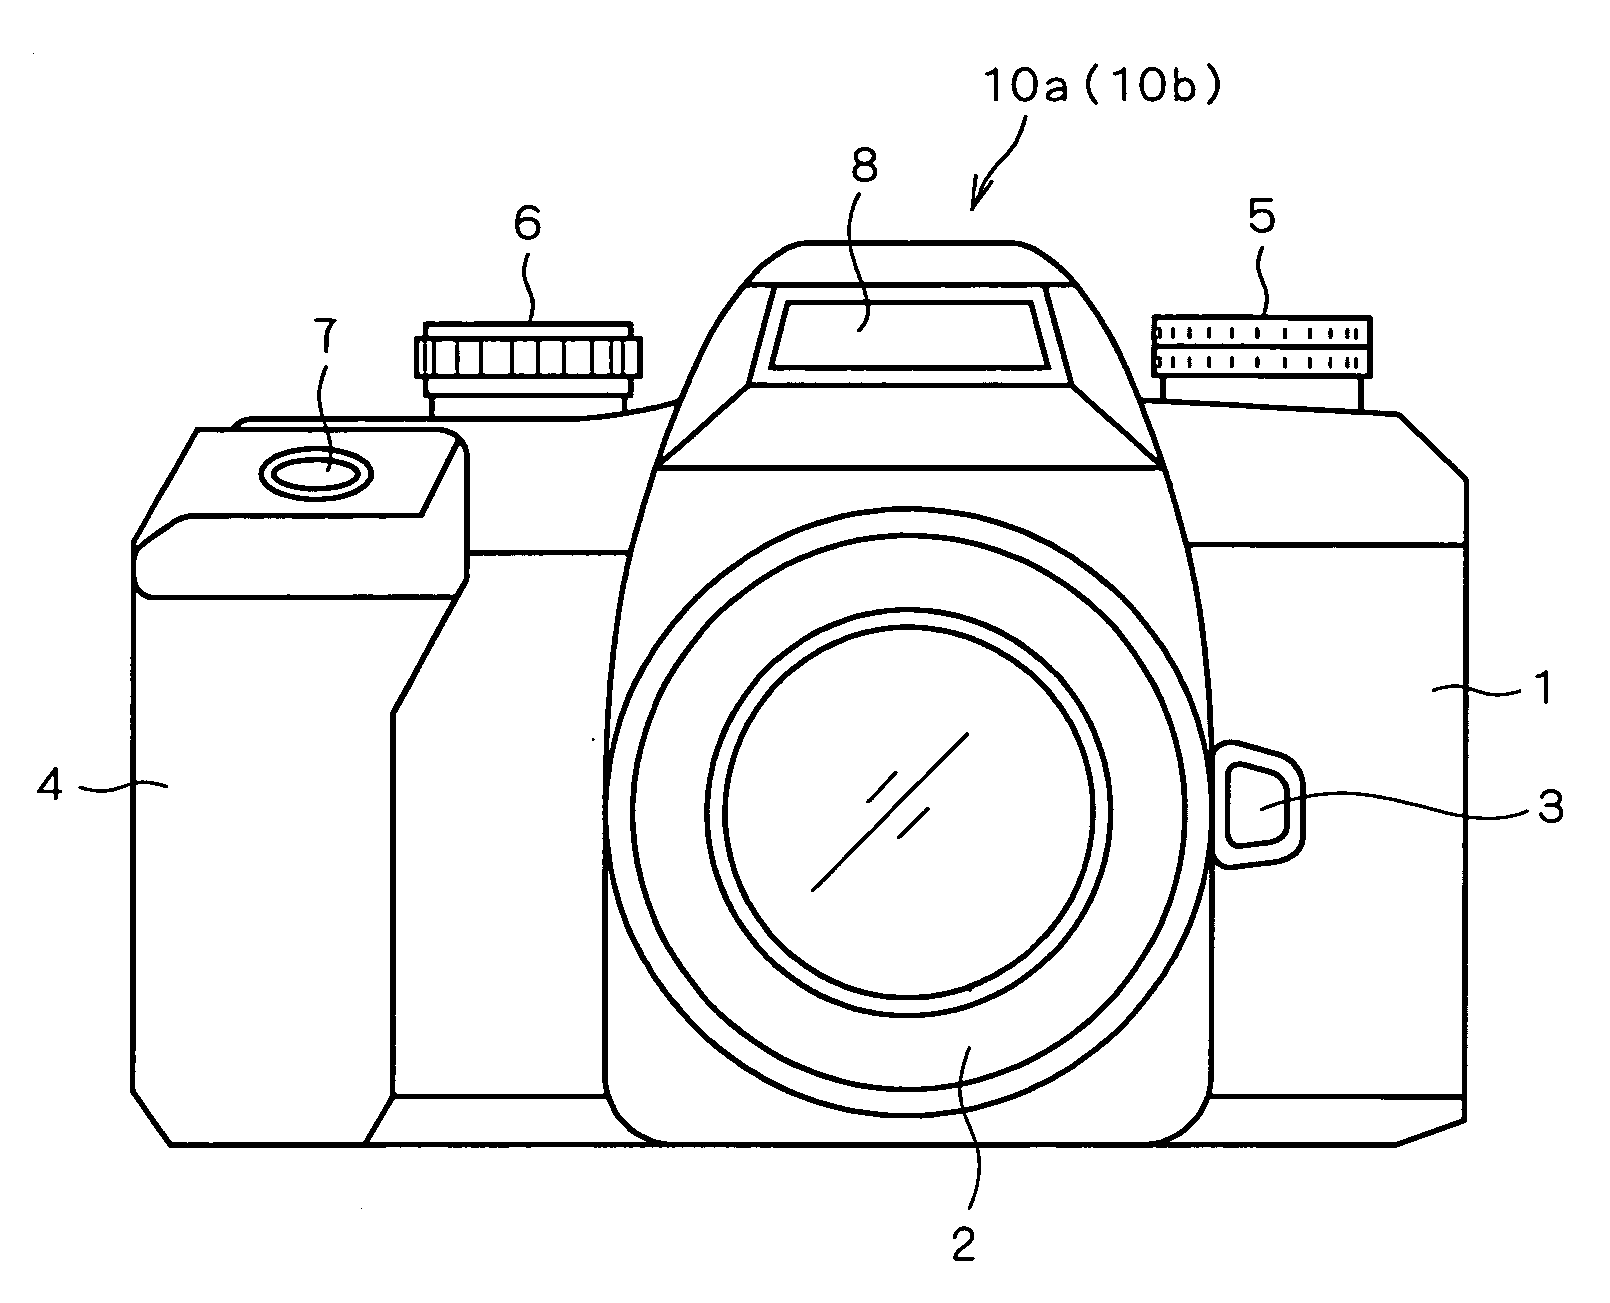 Image capturing apparatus, and method of setting flash synchronization speed